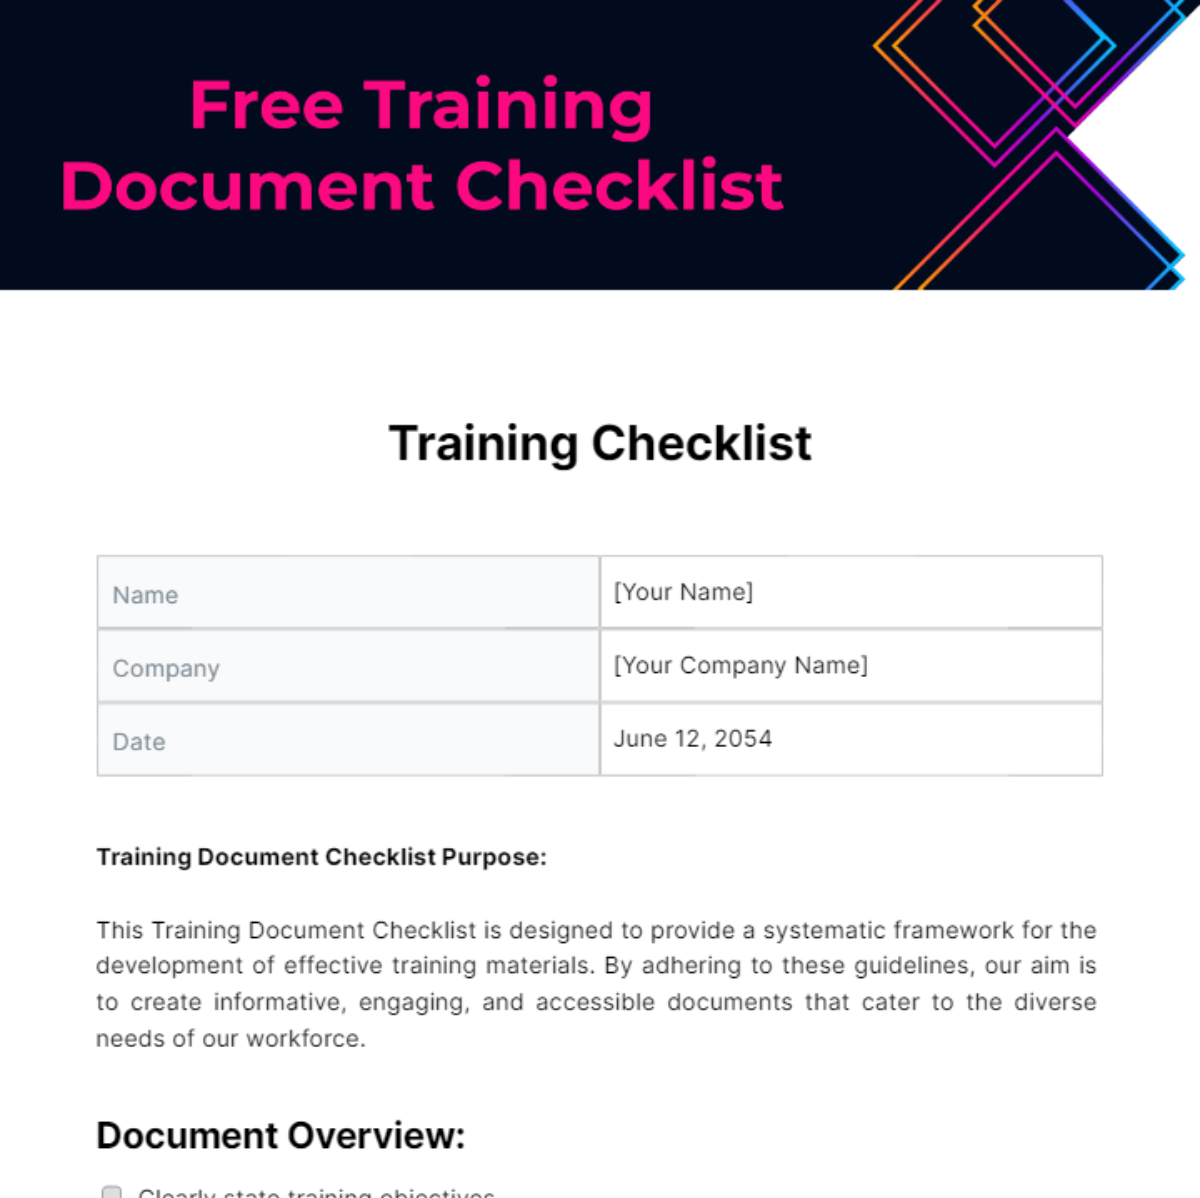 Free Training Document Checklist Template